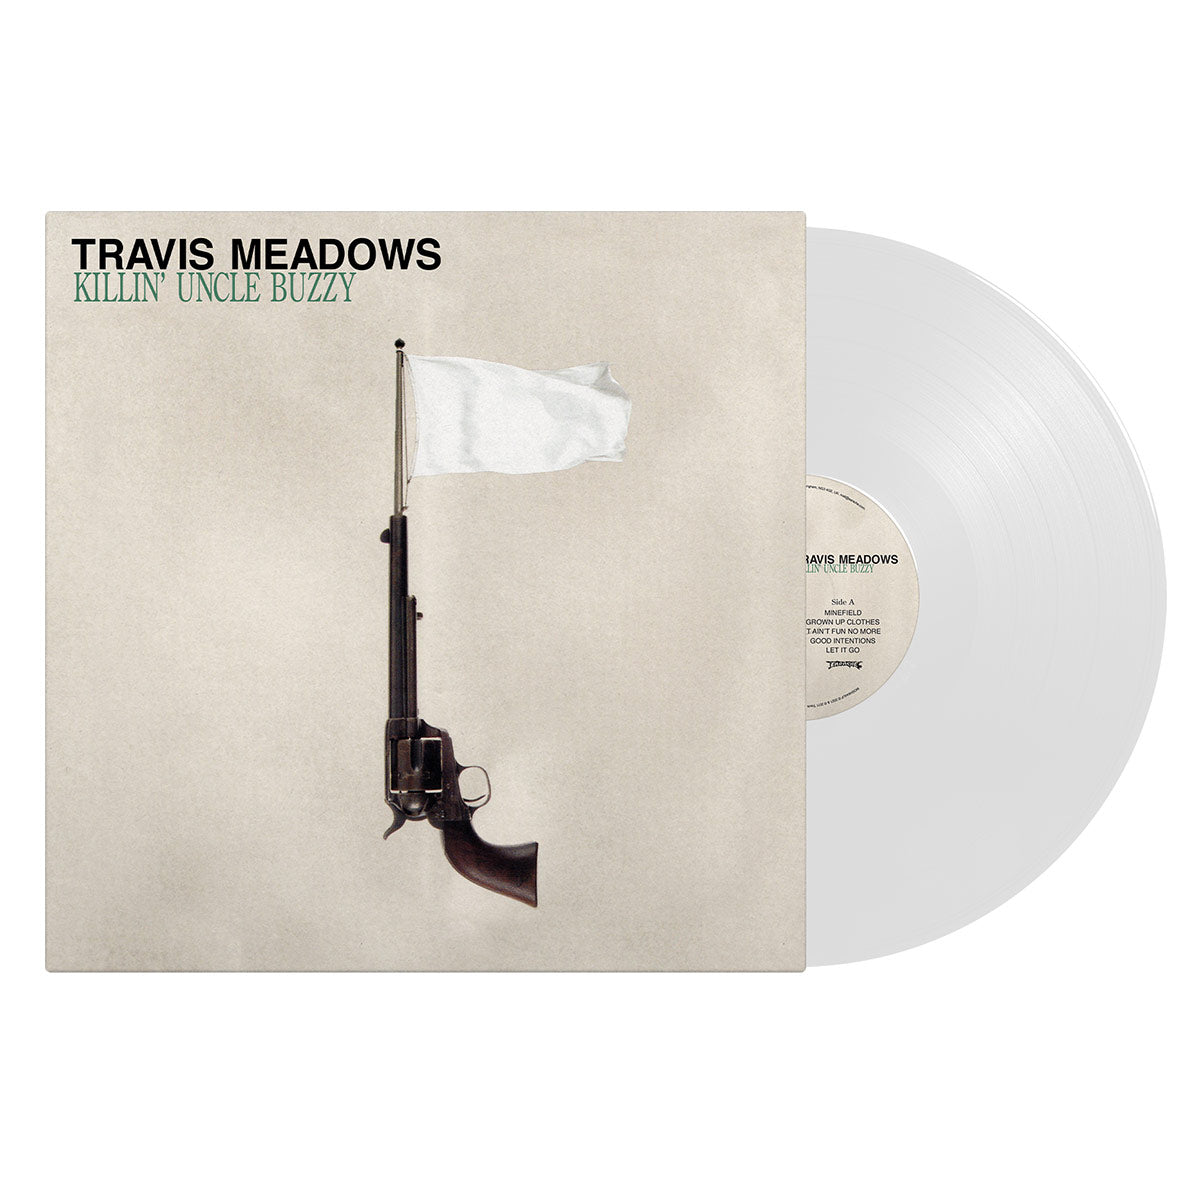 Travis Meadows "Killin' Uncle Buzzy" Clear Vinyl (Limited to 300 Copies)